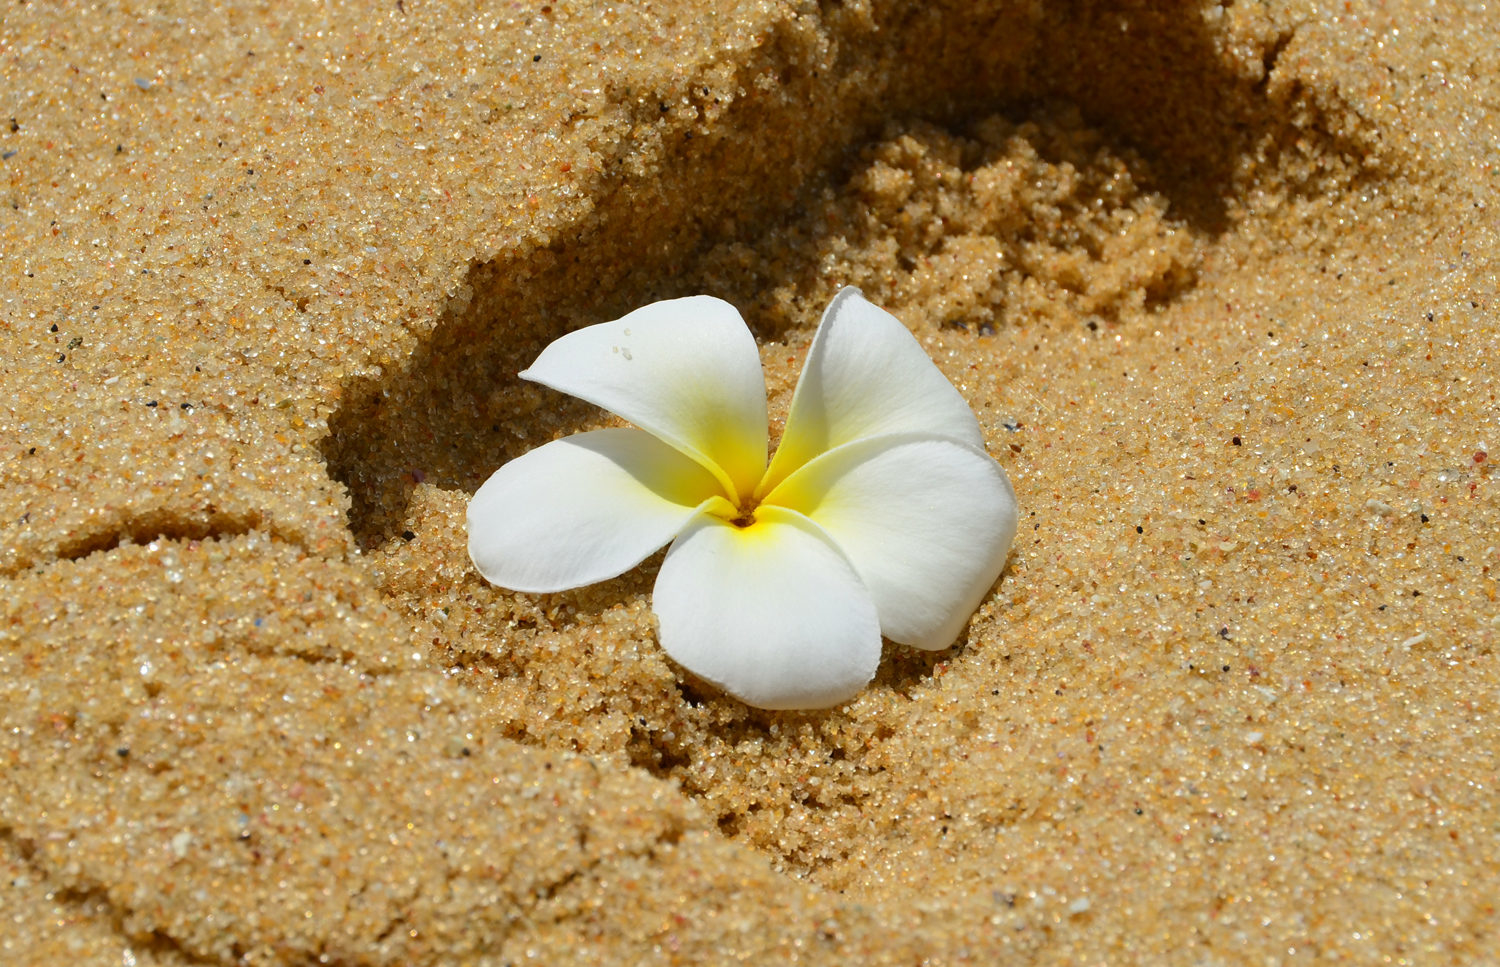 Цветы на песке